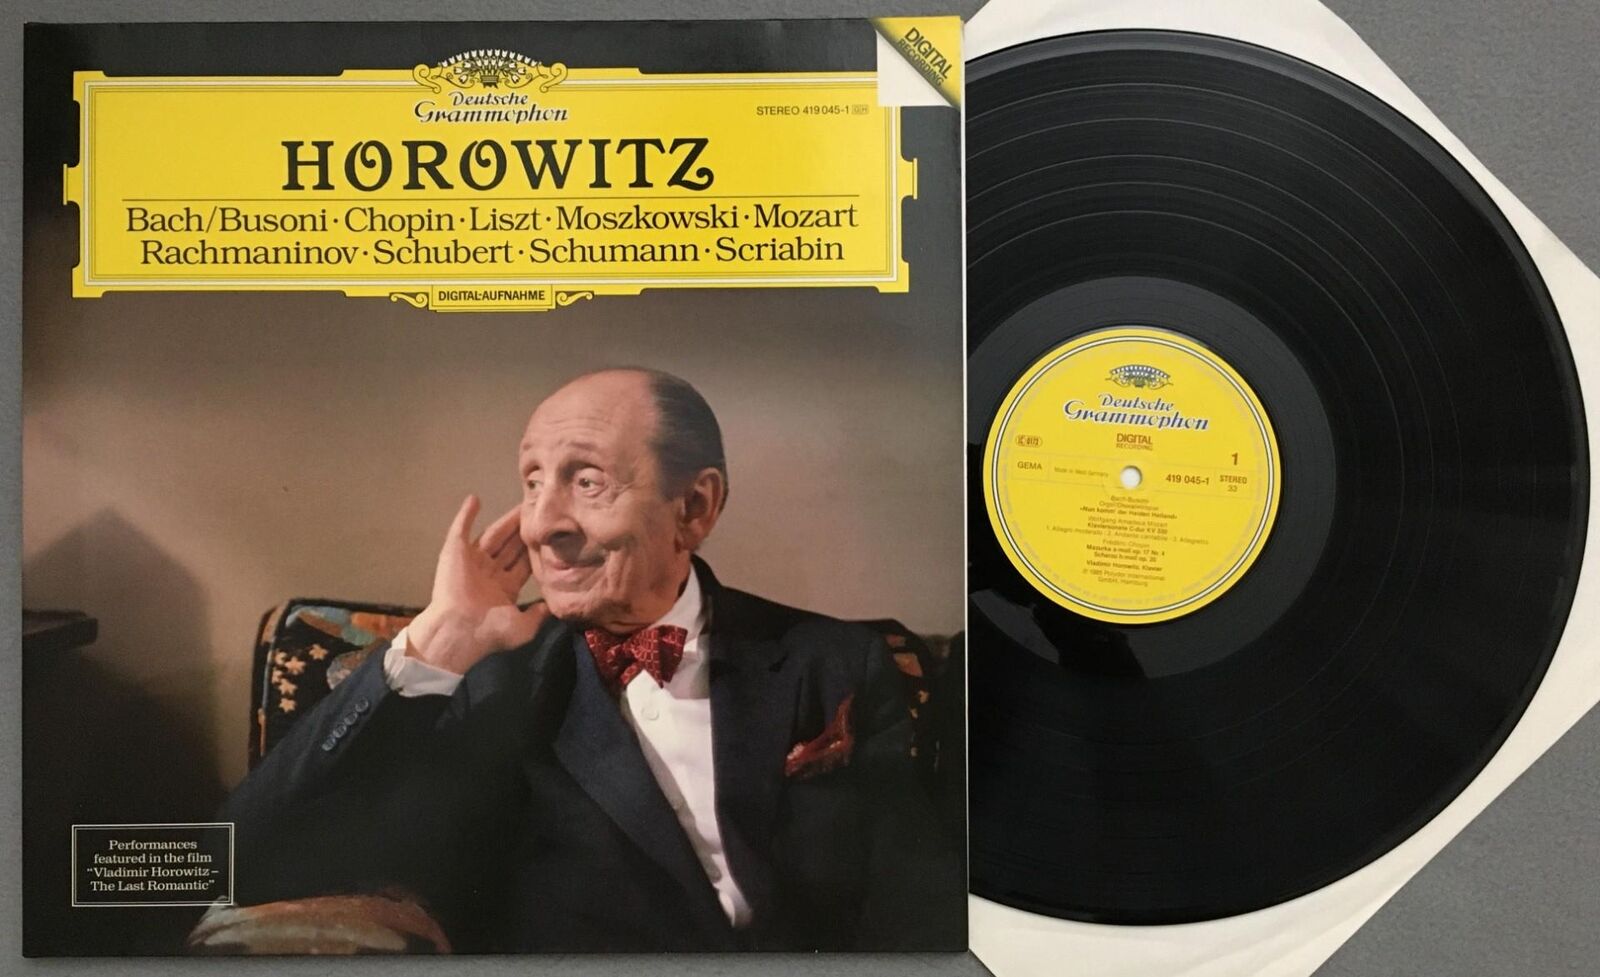 O792 Horowitz Klavier Bach Busoni Chopin Liszt Mozart DGG 419 045-1 Digital Stereo